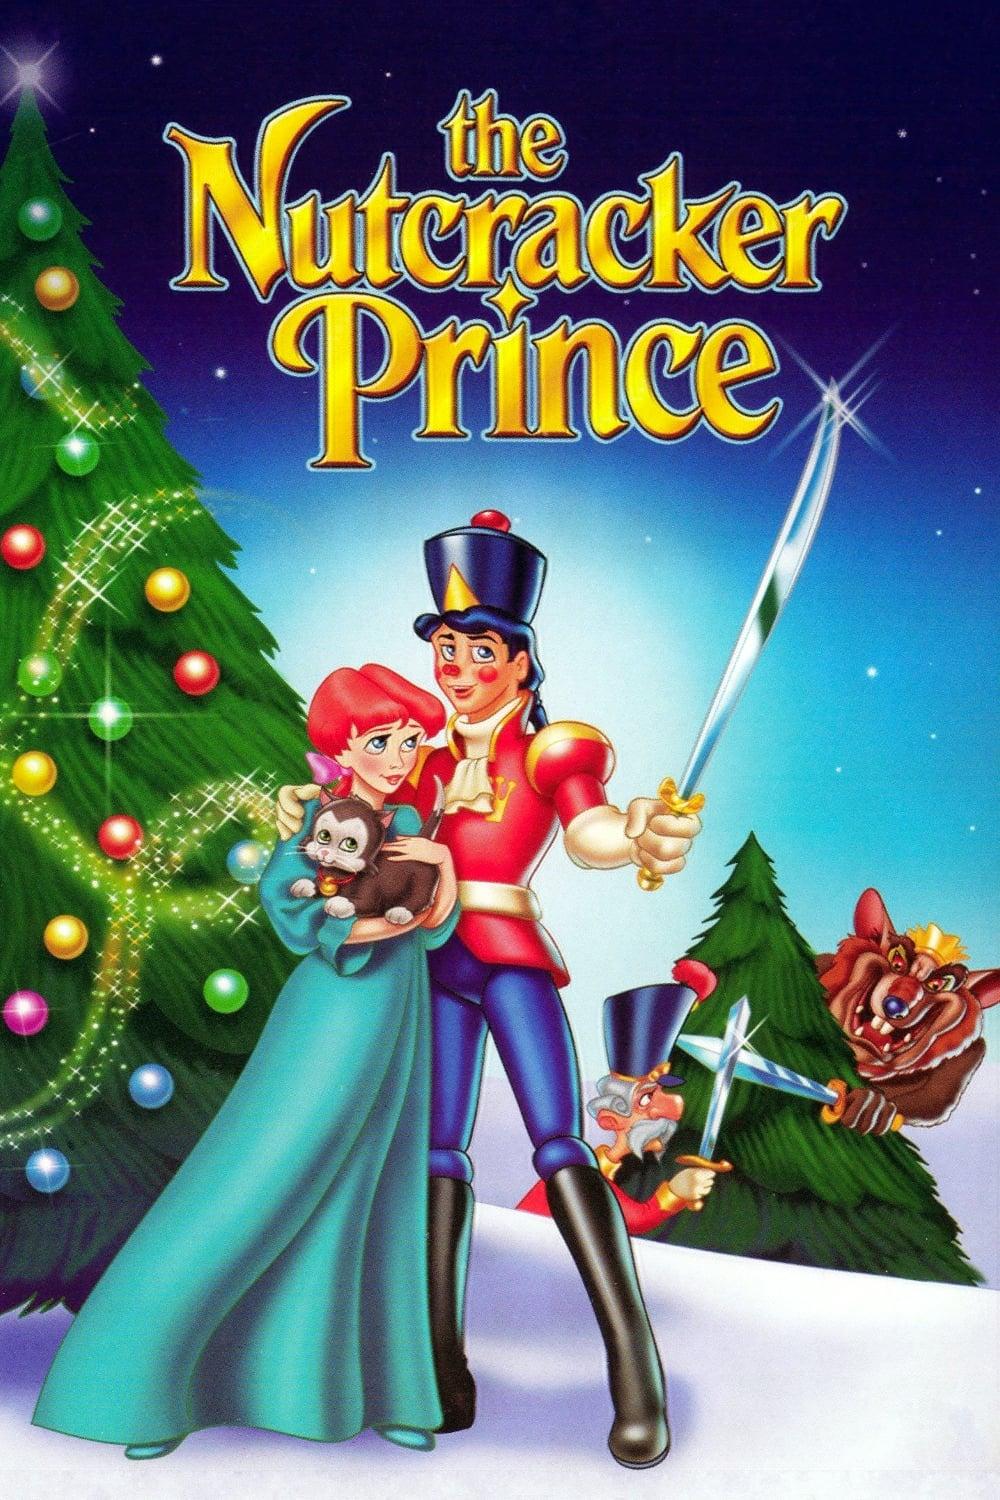 The Nutcracker Prince poster